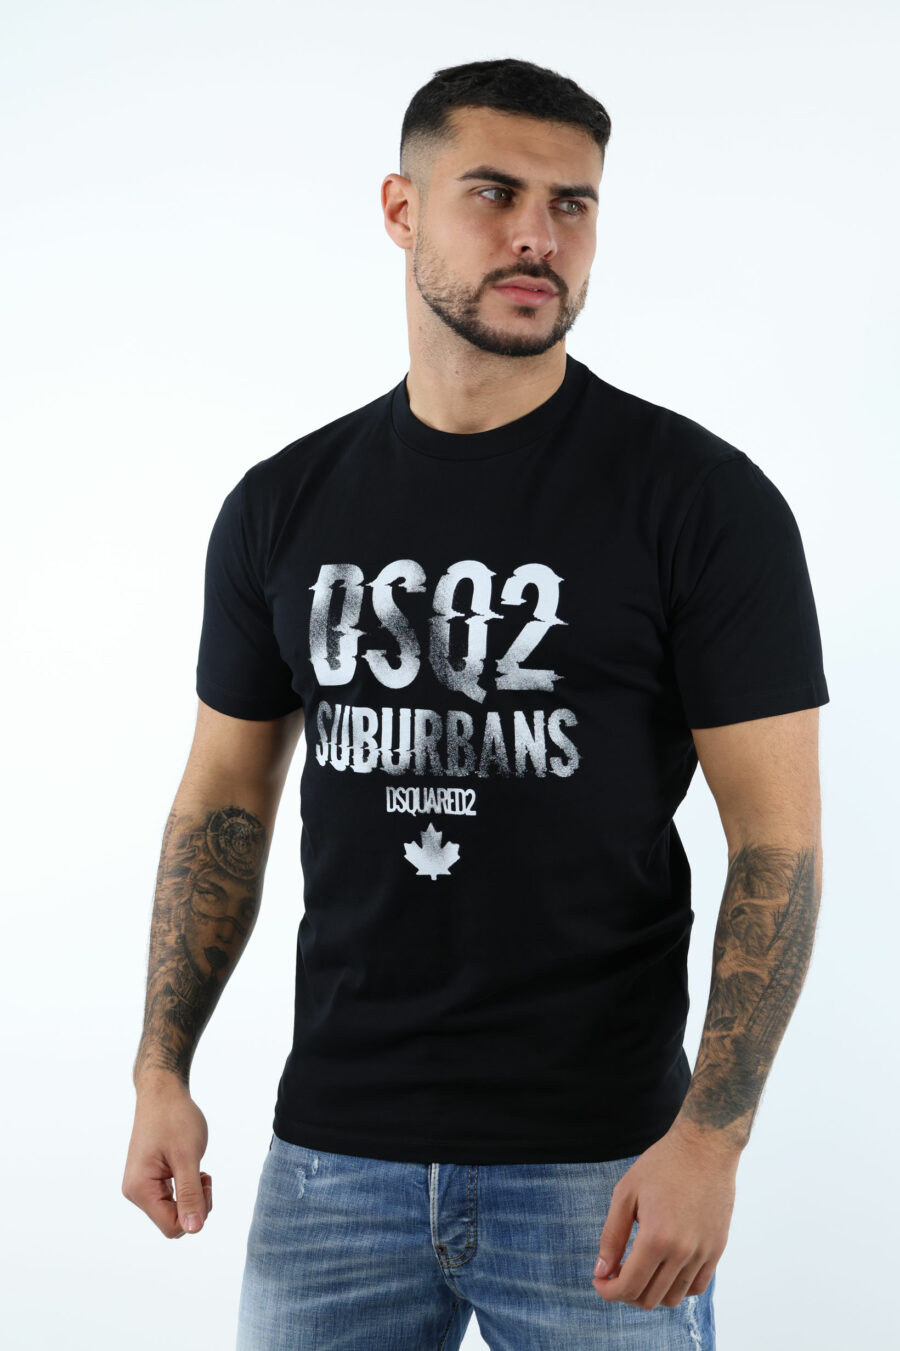 T-shirt noir avec maxilogo "suburbans" blanc - 106888